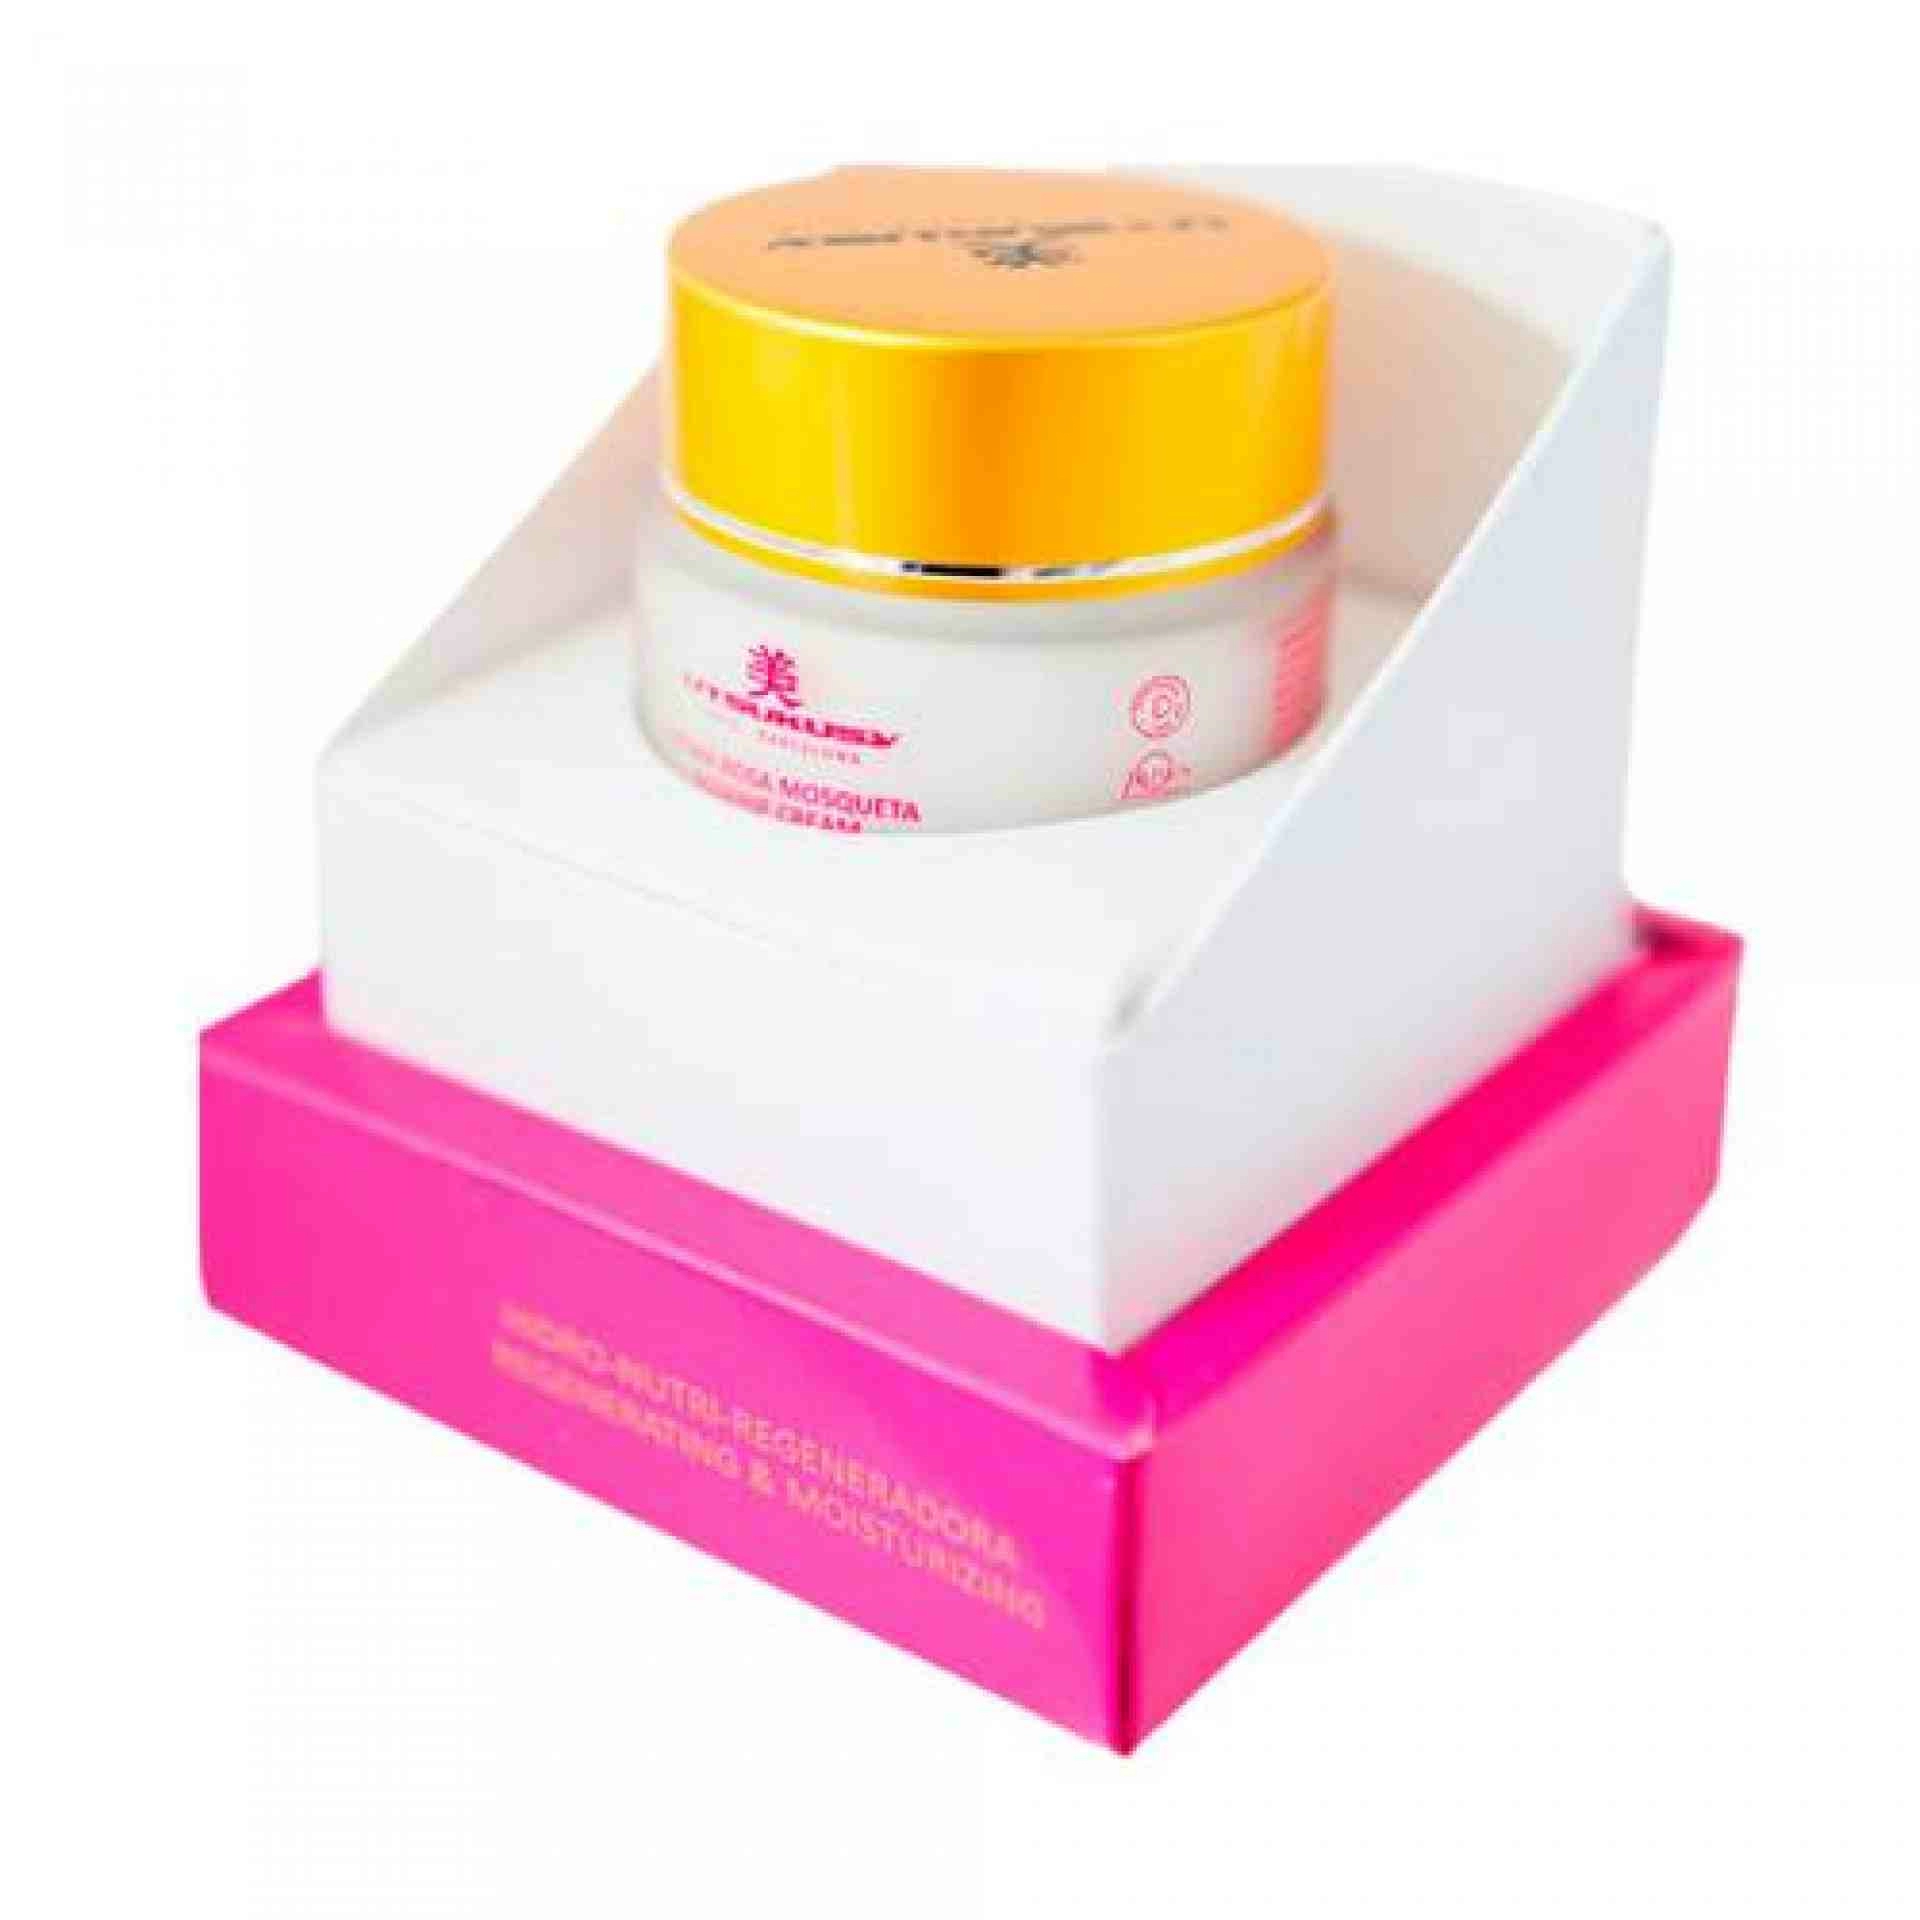 Extraline Crema Rosa Mosqueta 50ml | Crema Regeneradora - Utsukusy ®